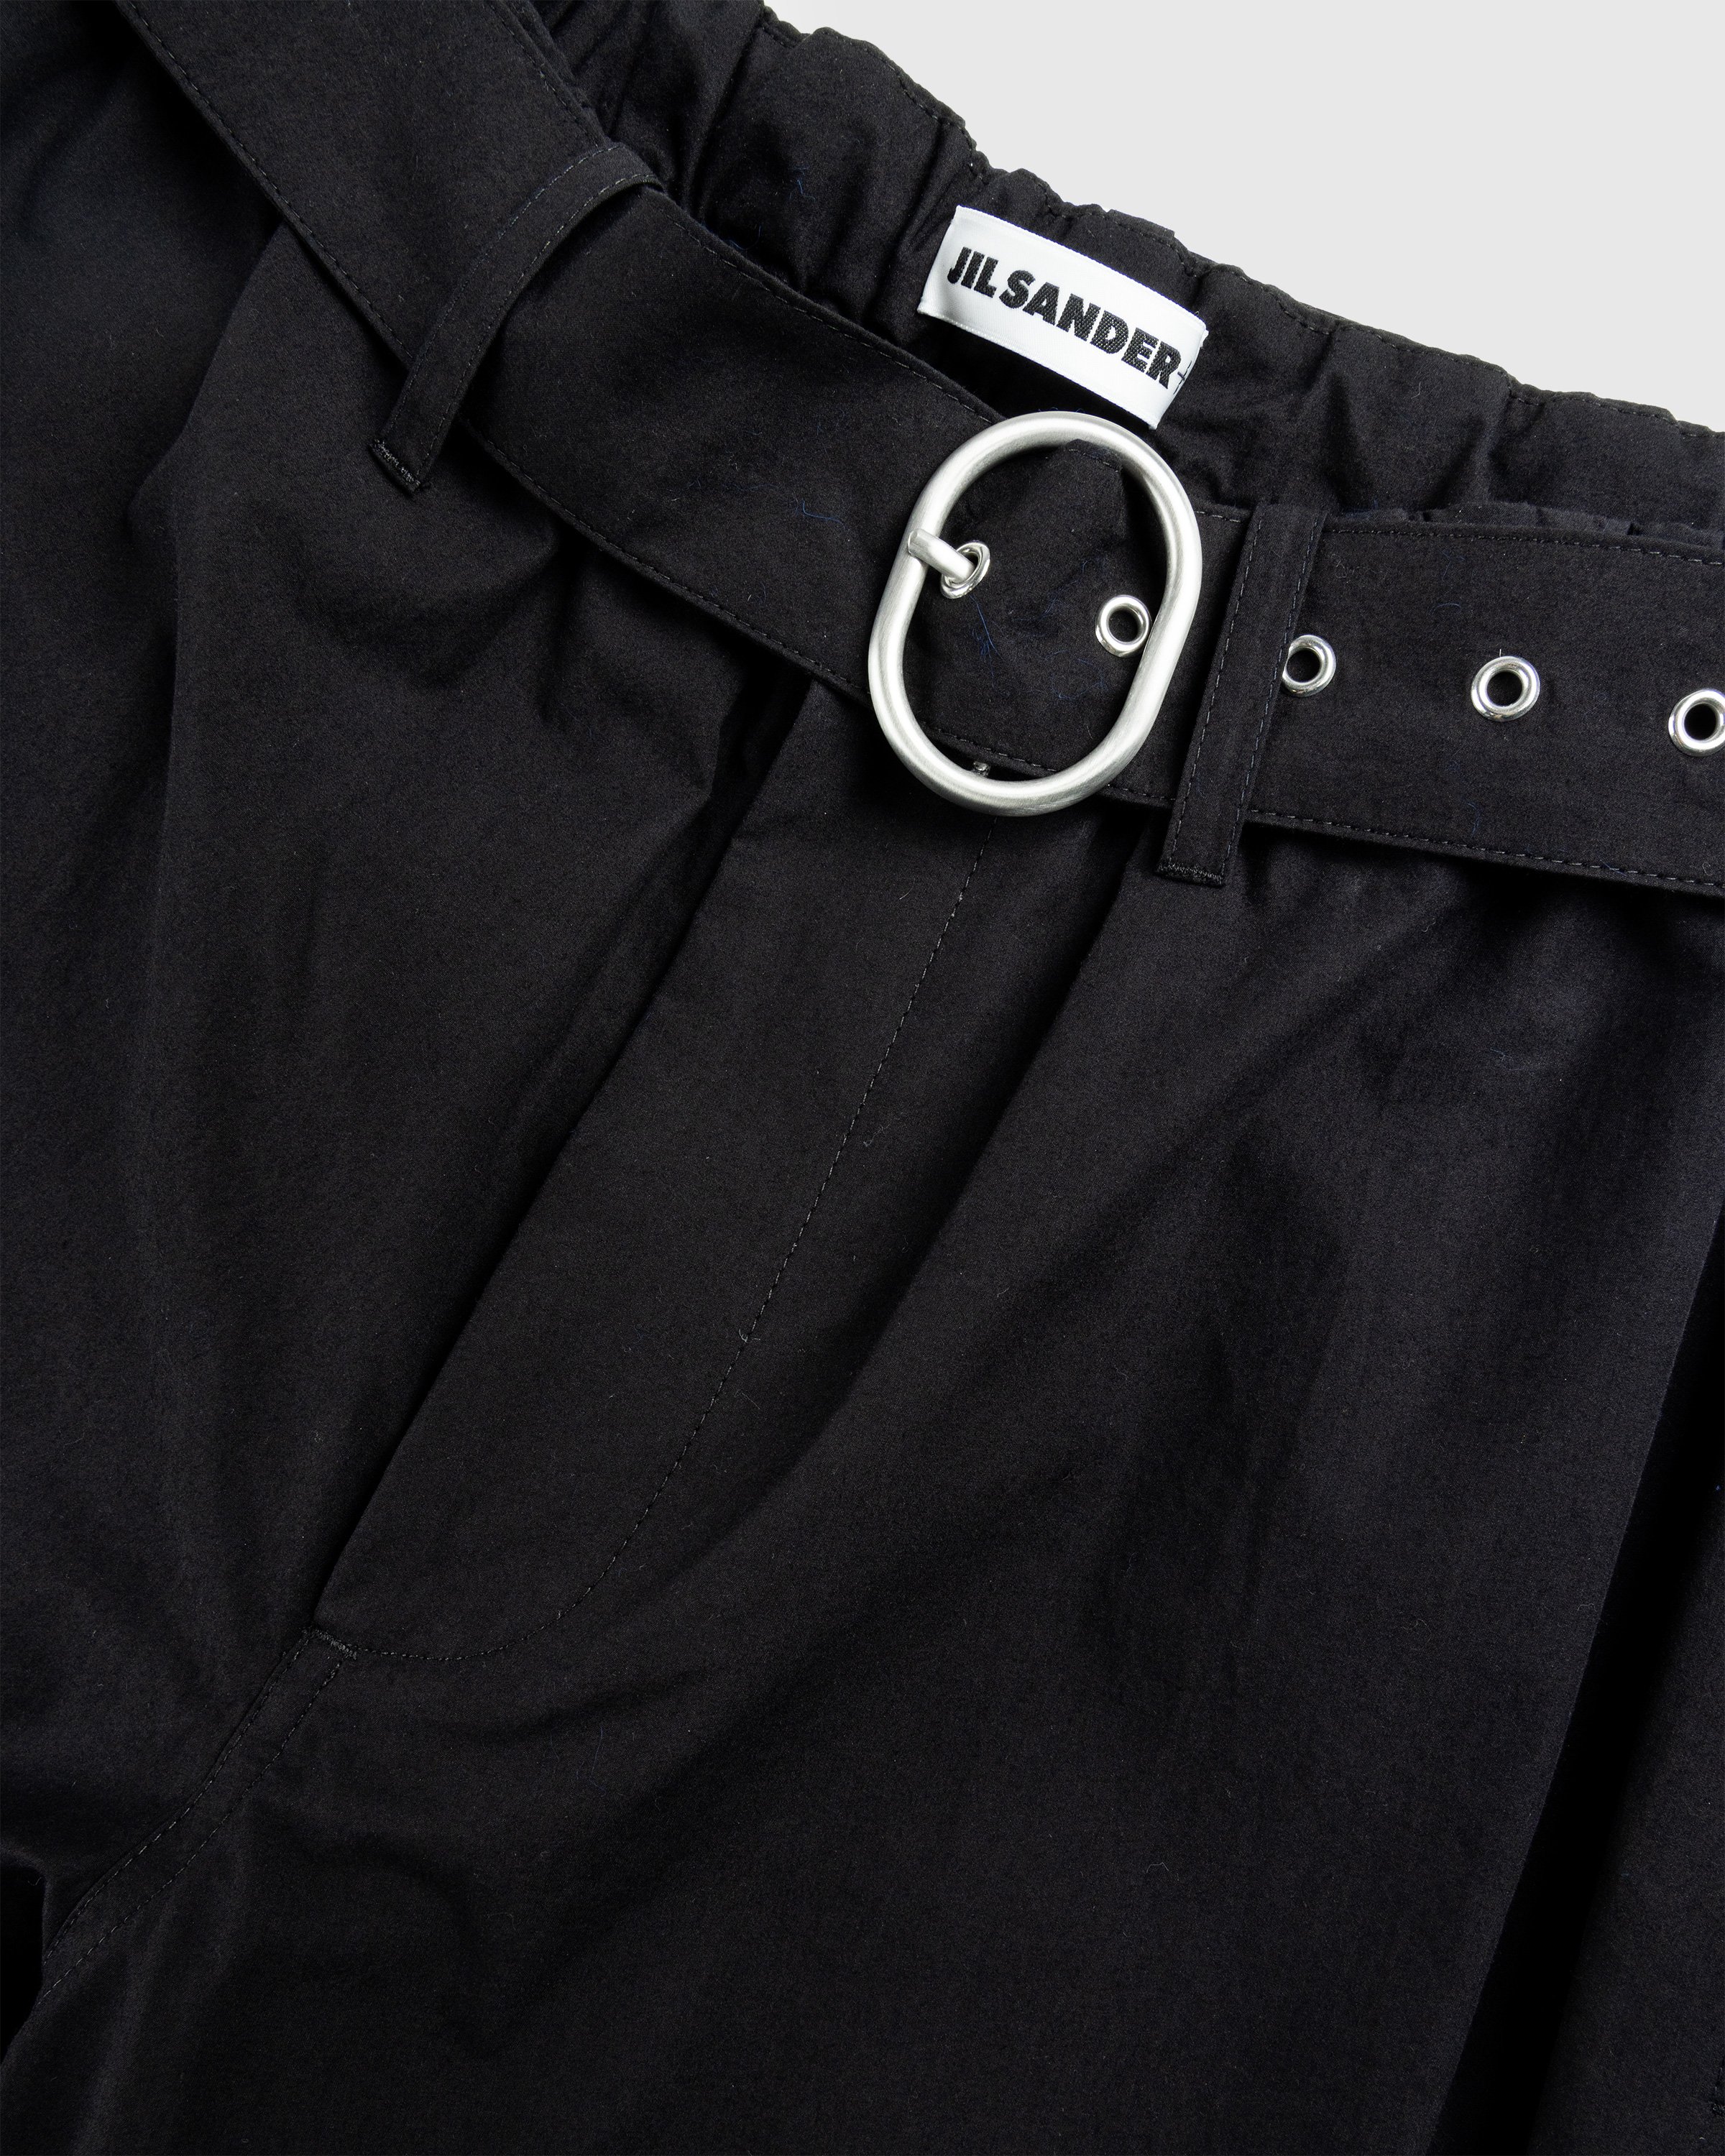 Jil Sander - Trouser 93 - Clothing - Black - Image 6